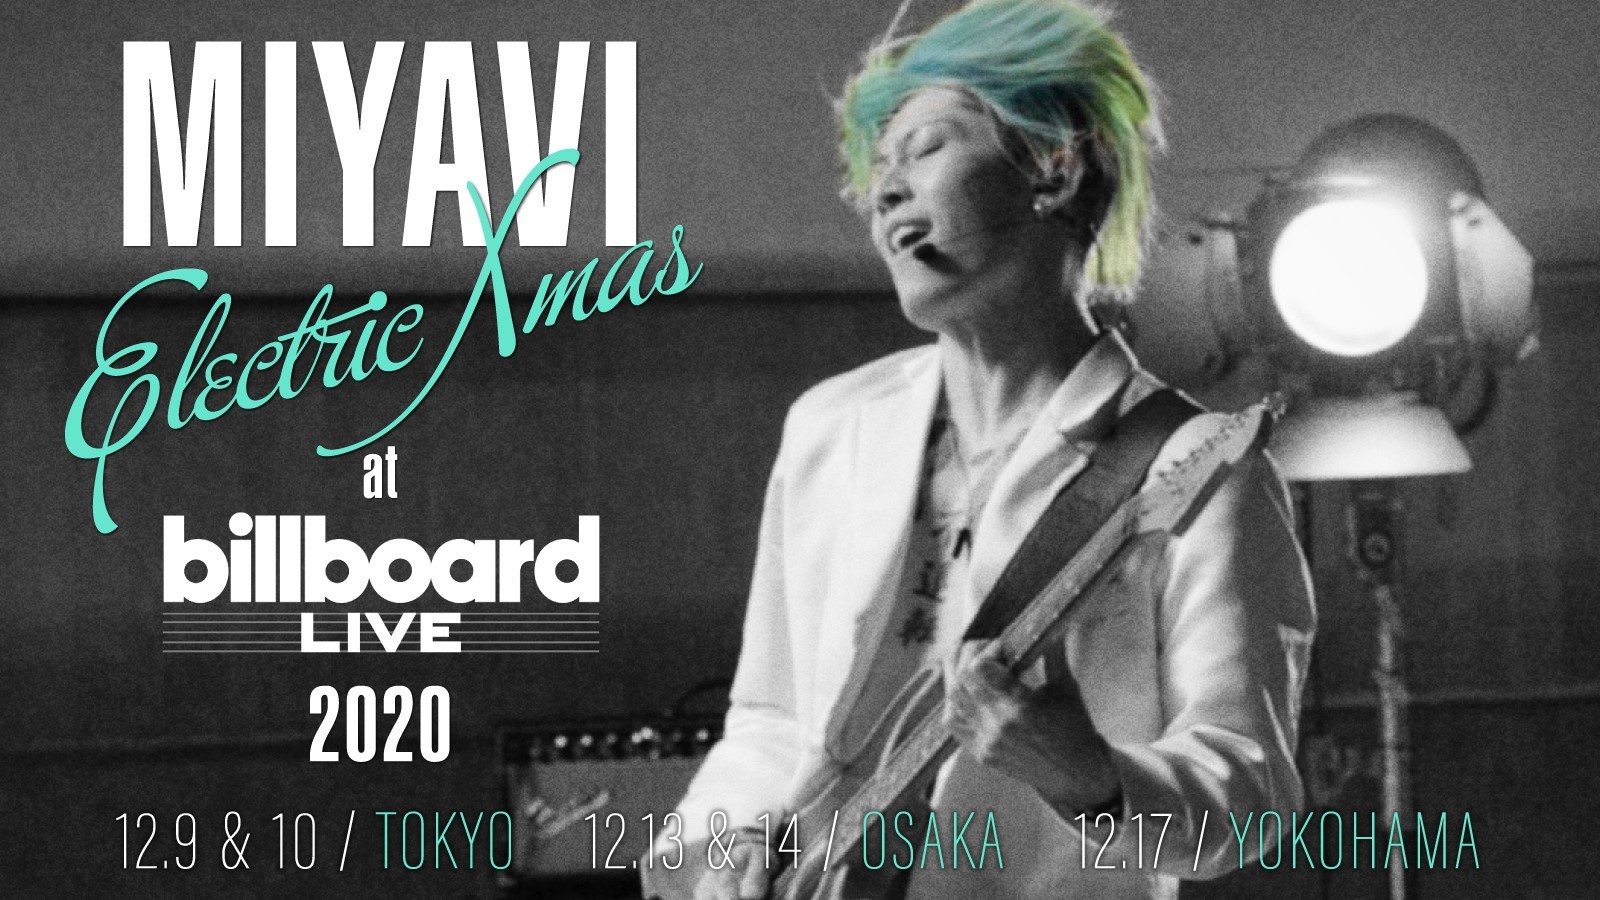 Miyavi Miyavi Electric Xmas At Billboard Live 12月に東京 大阪 横浜で開催決定 Spice エンタメ特化型情報メディア スパイス